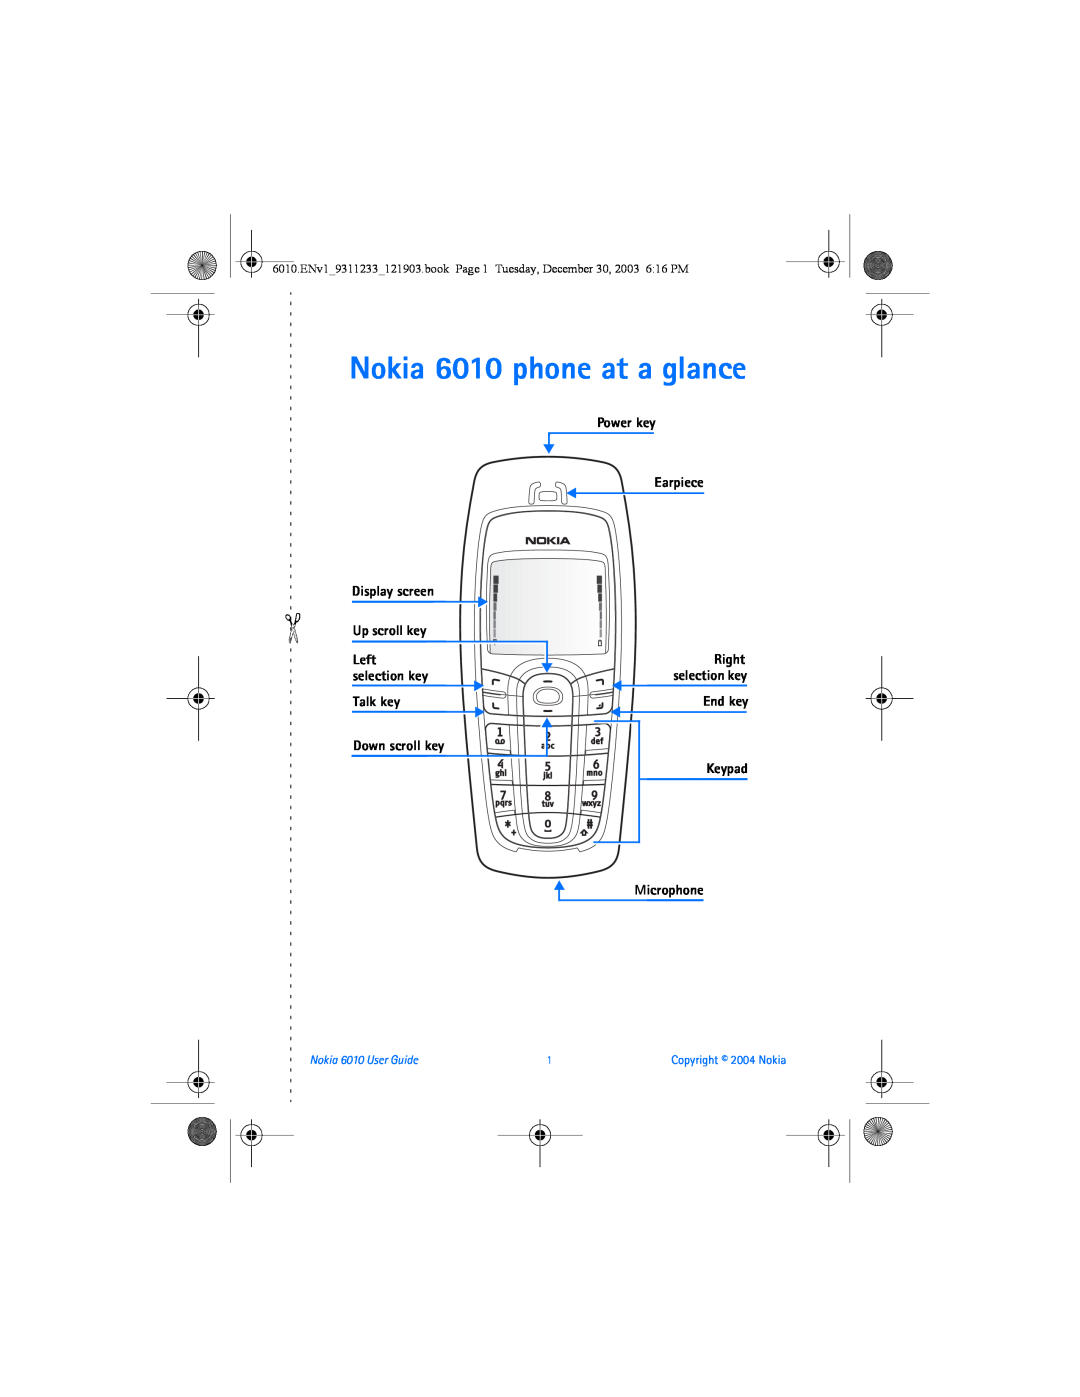 Nokia Nokia 6010 phone at a glance, Power key Earpiece, Left, Talk key Down scroll key, End key Keypad, Microphone 